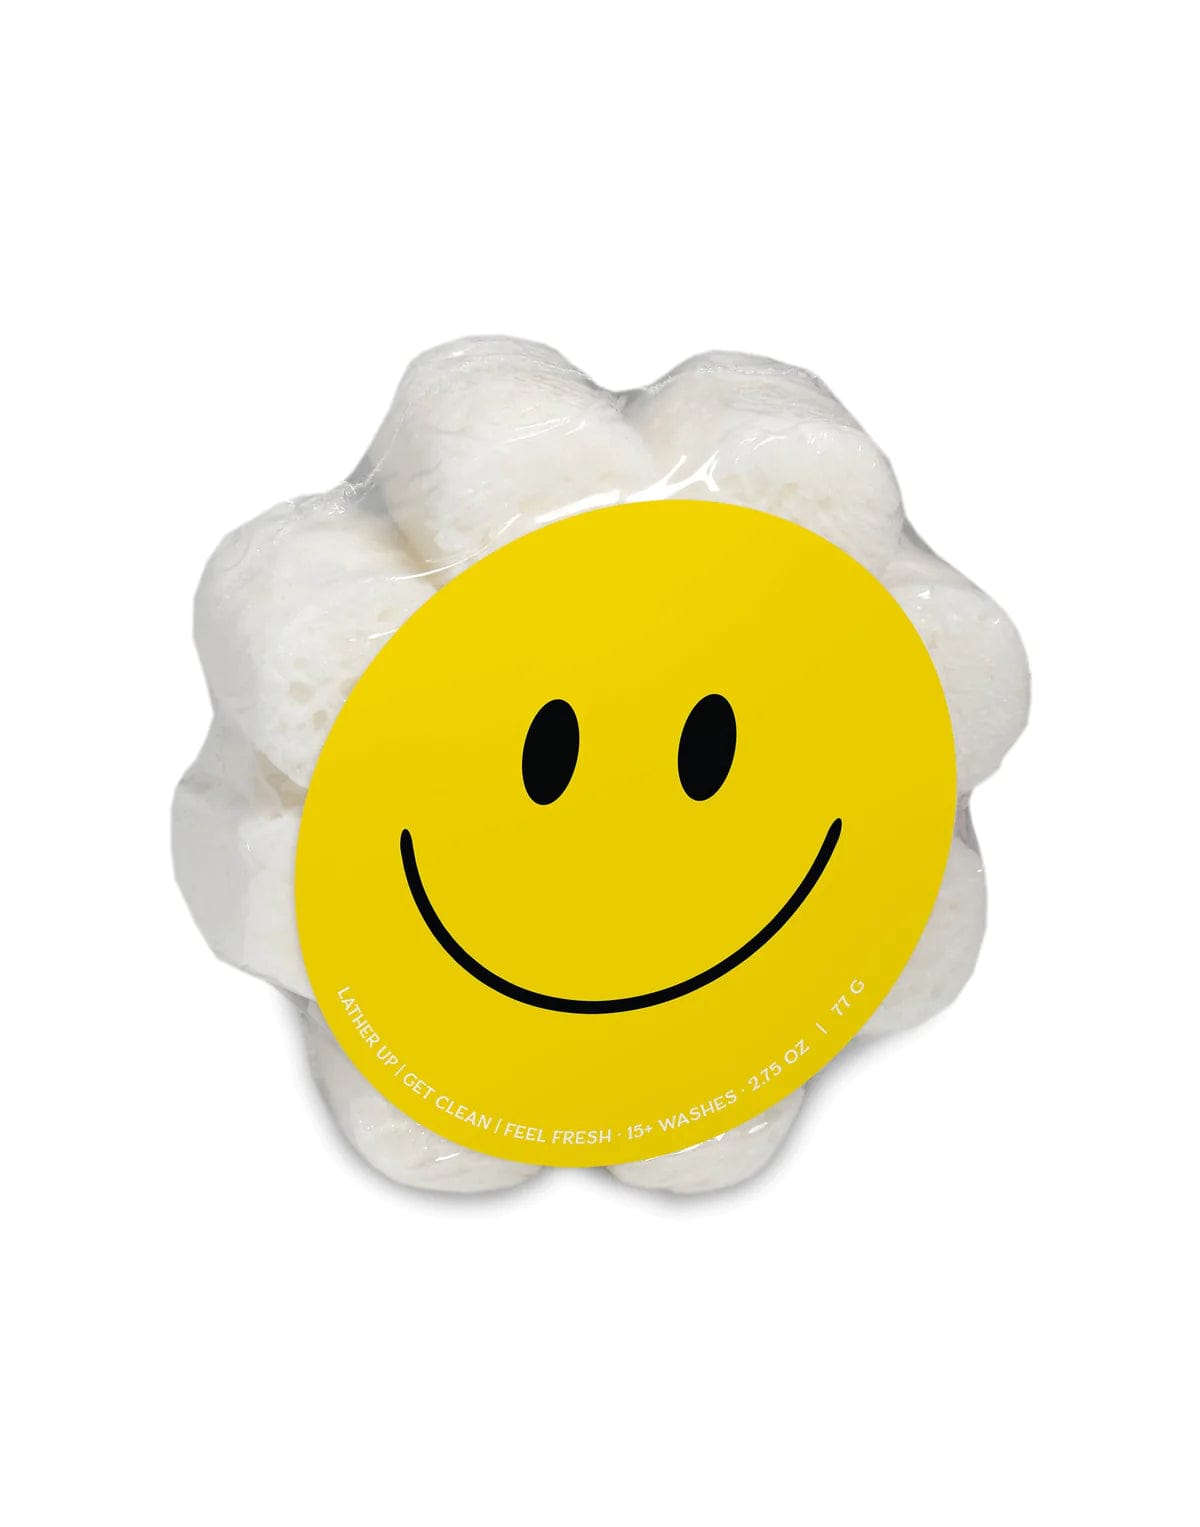 Caren Soap Sponge | Smile Caren soap sponge